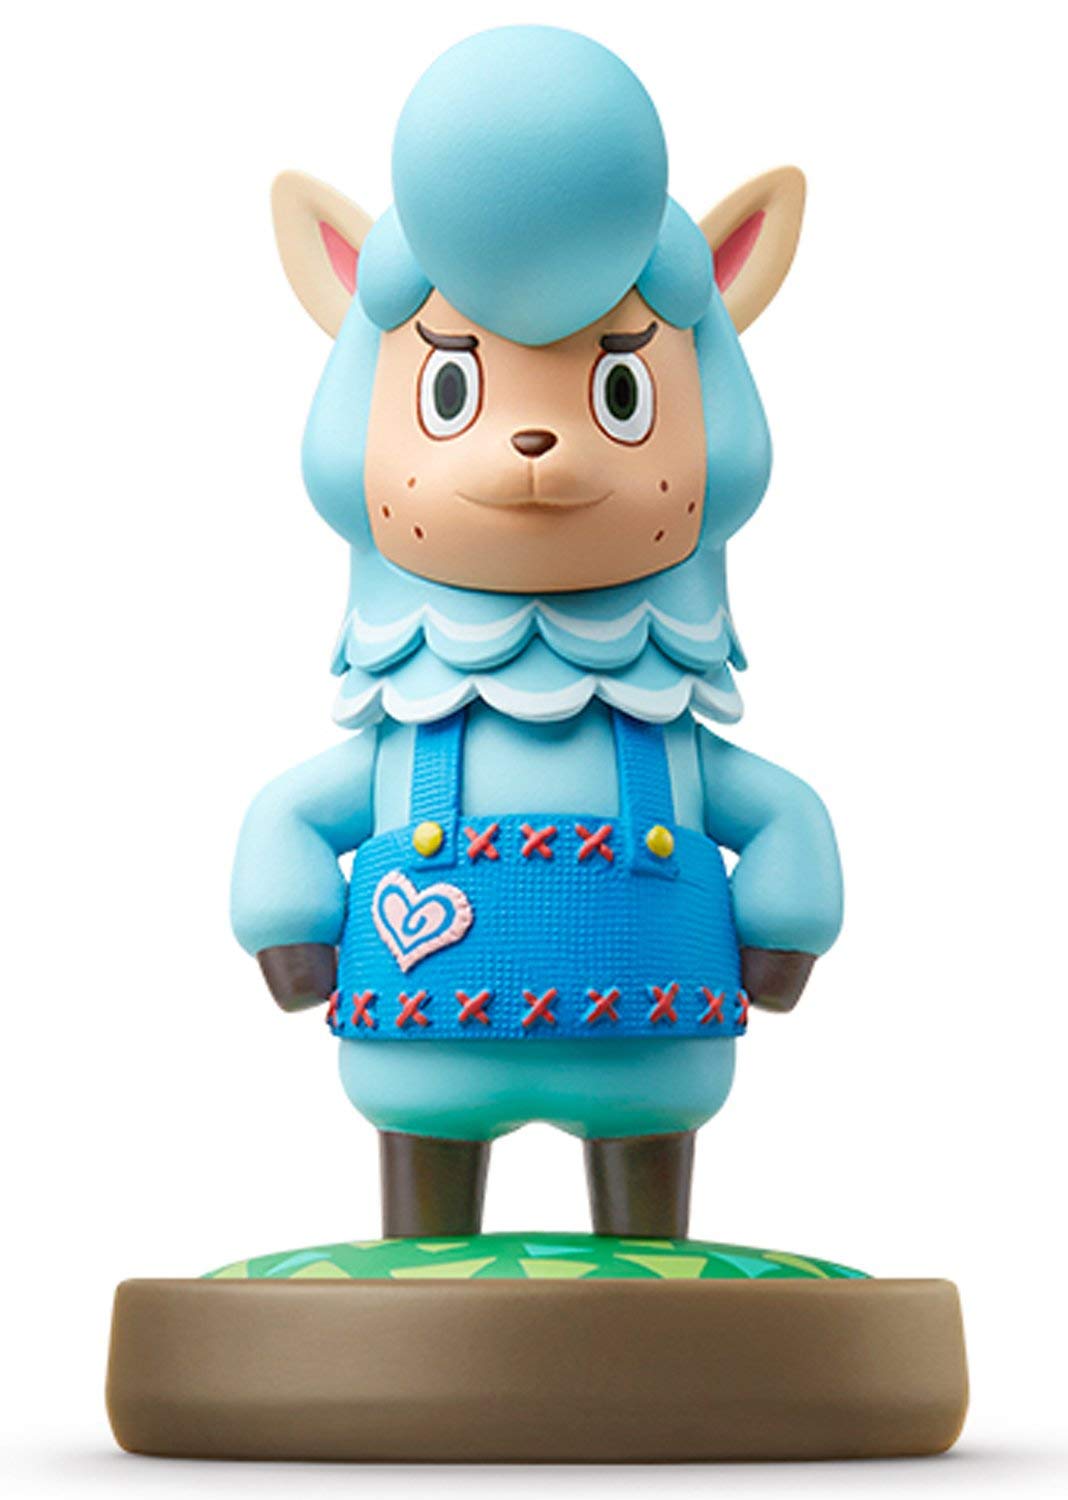 Cyrus (Animal Crossing series) - Nintendo WiiU Amiibo (Japanese Import) Amiibo Nintendo   